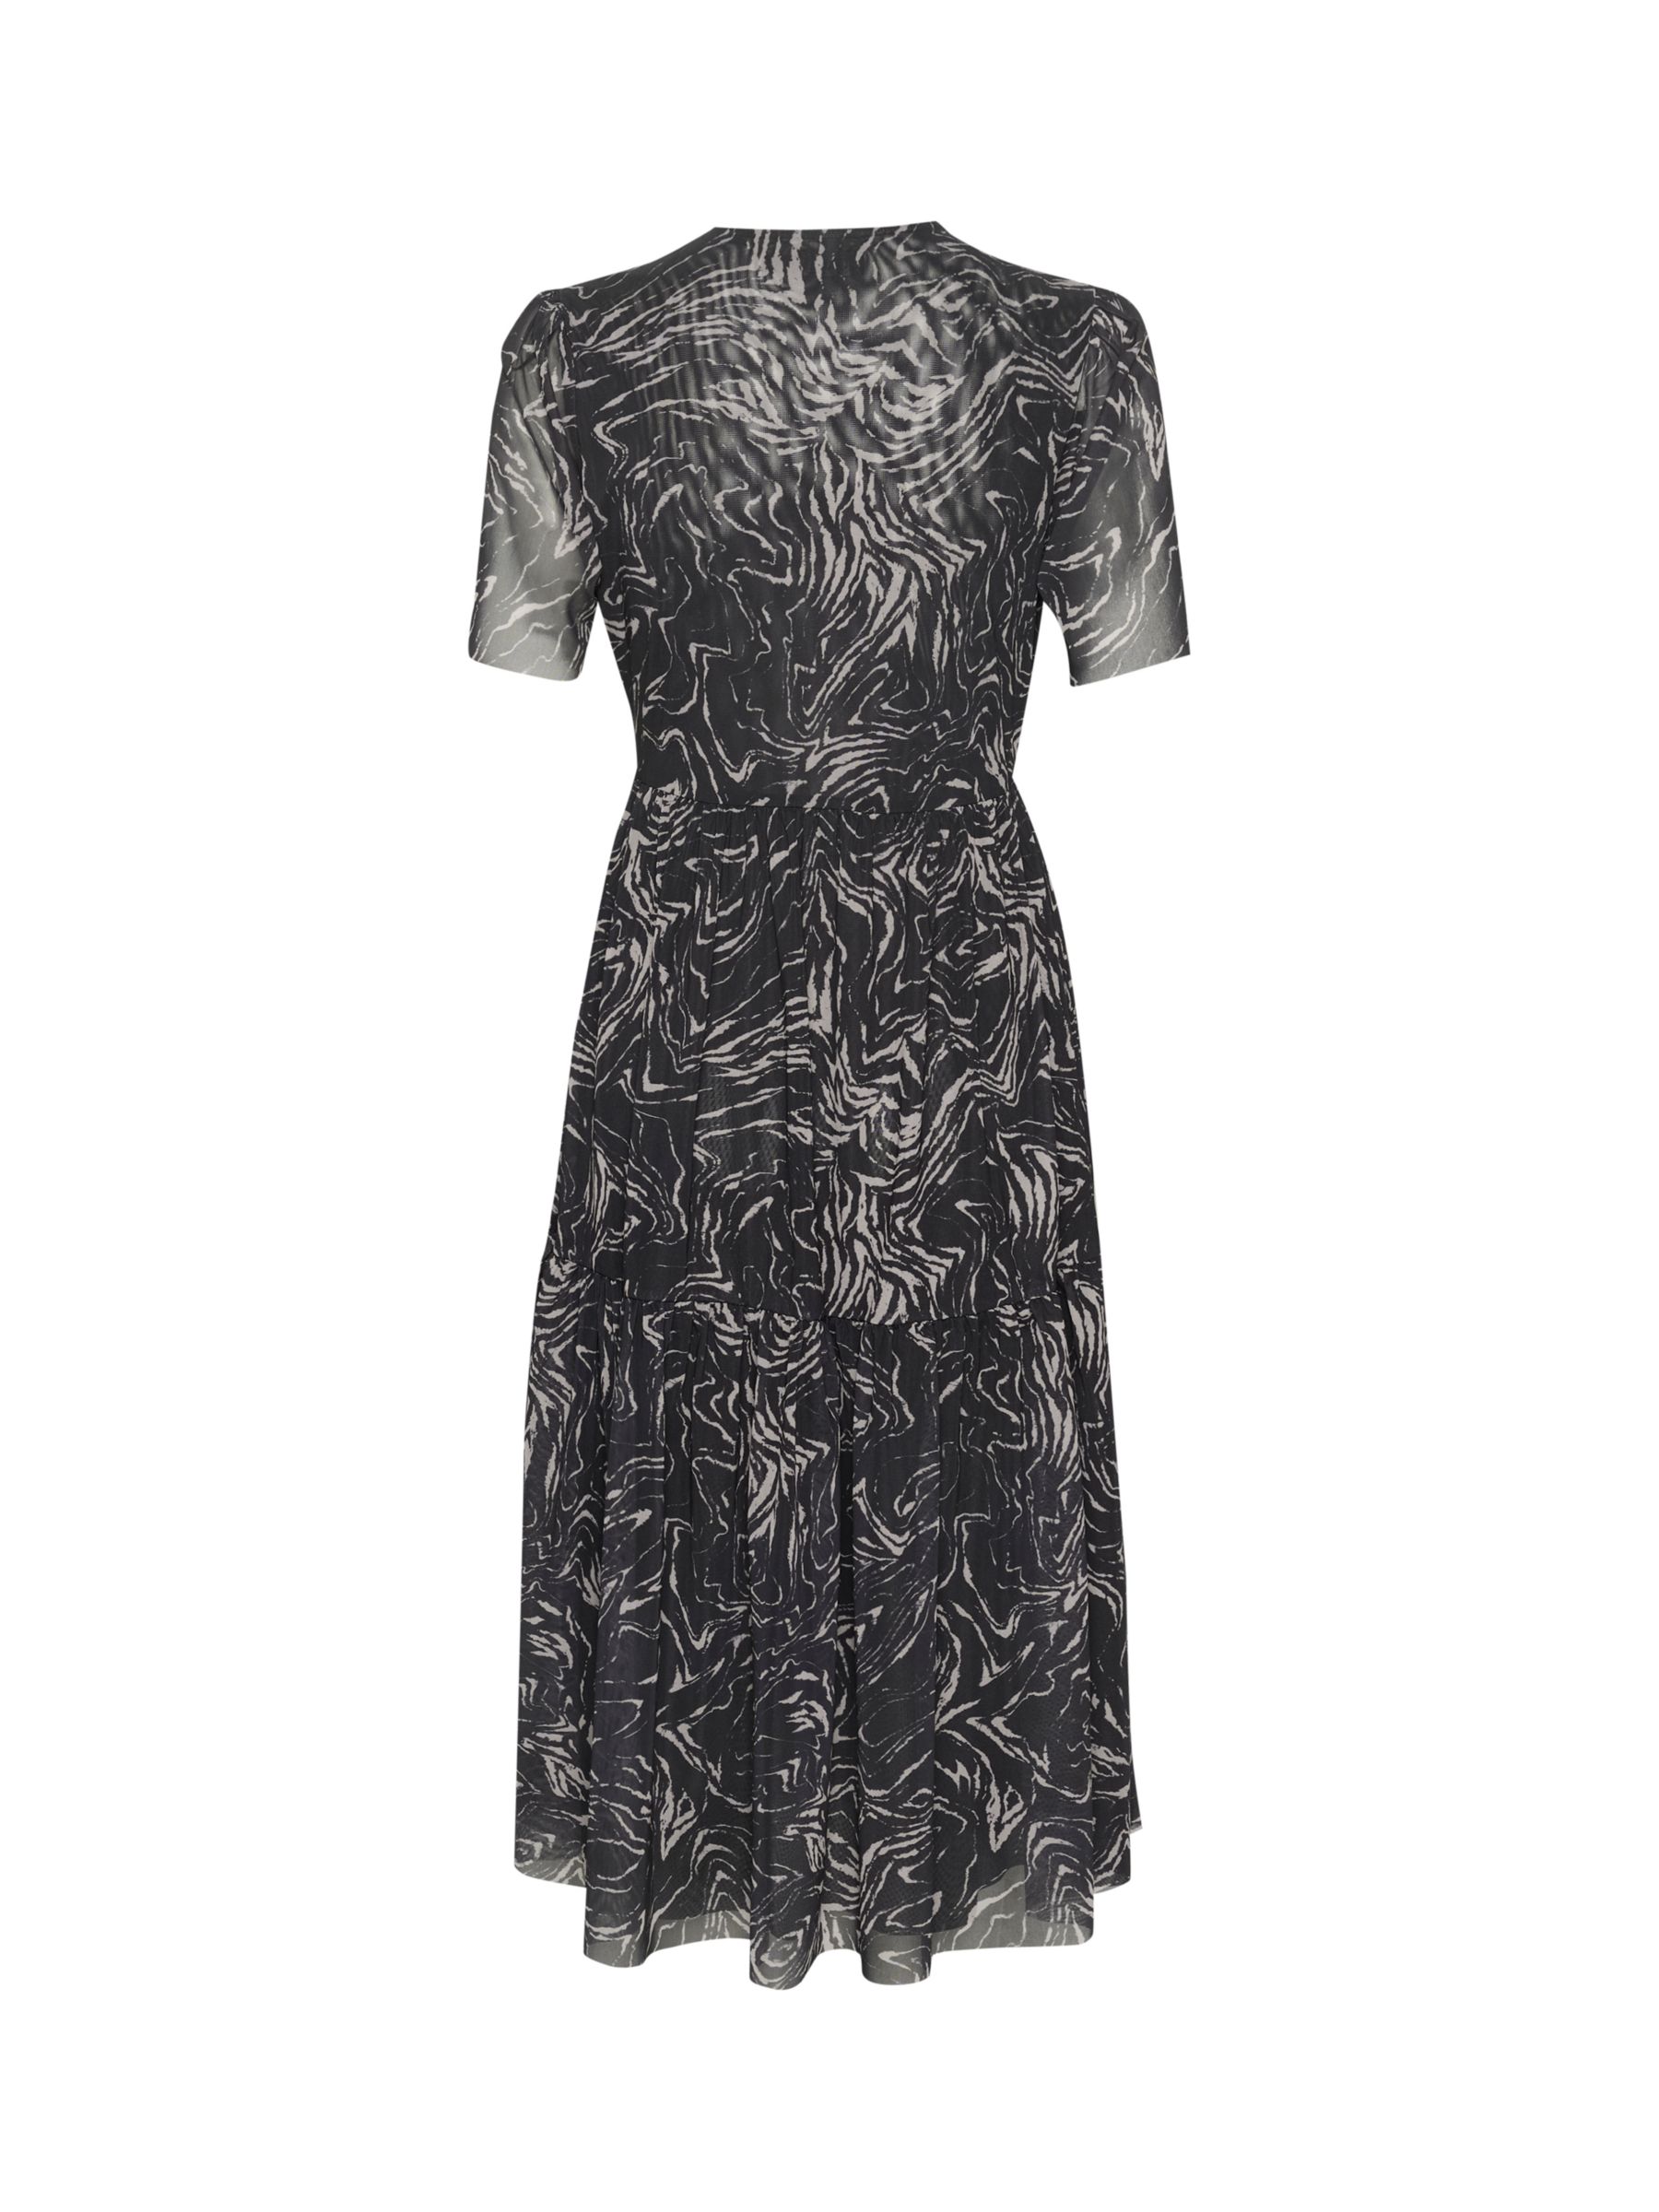 Soaked In Luxury Aldora Mesh Short Sleeve Wrap Dress, Black Swirl Print, XL